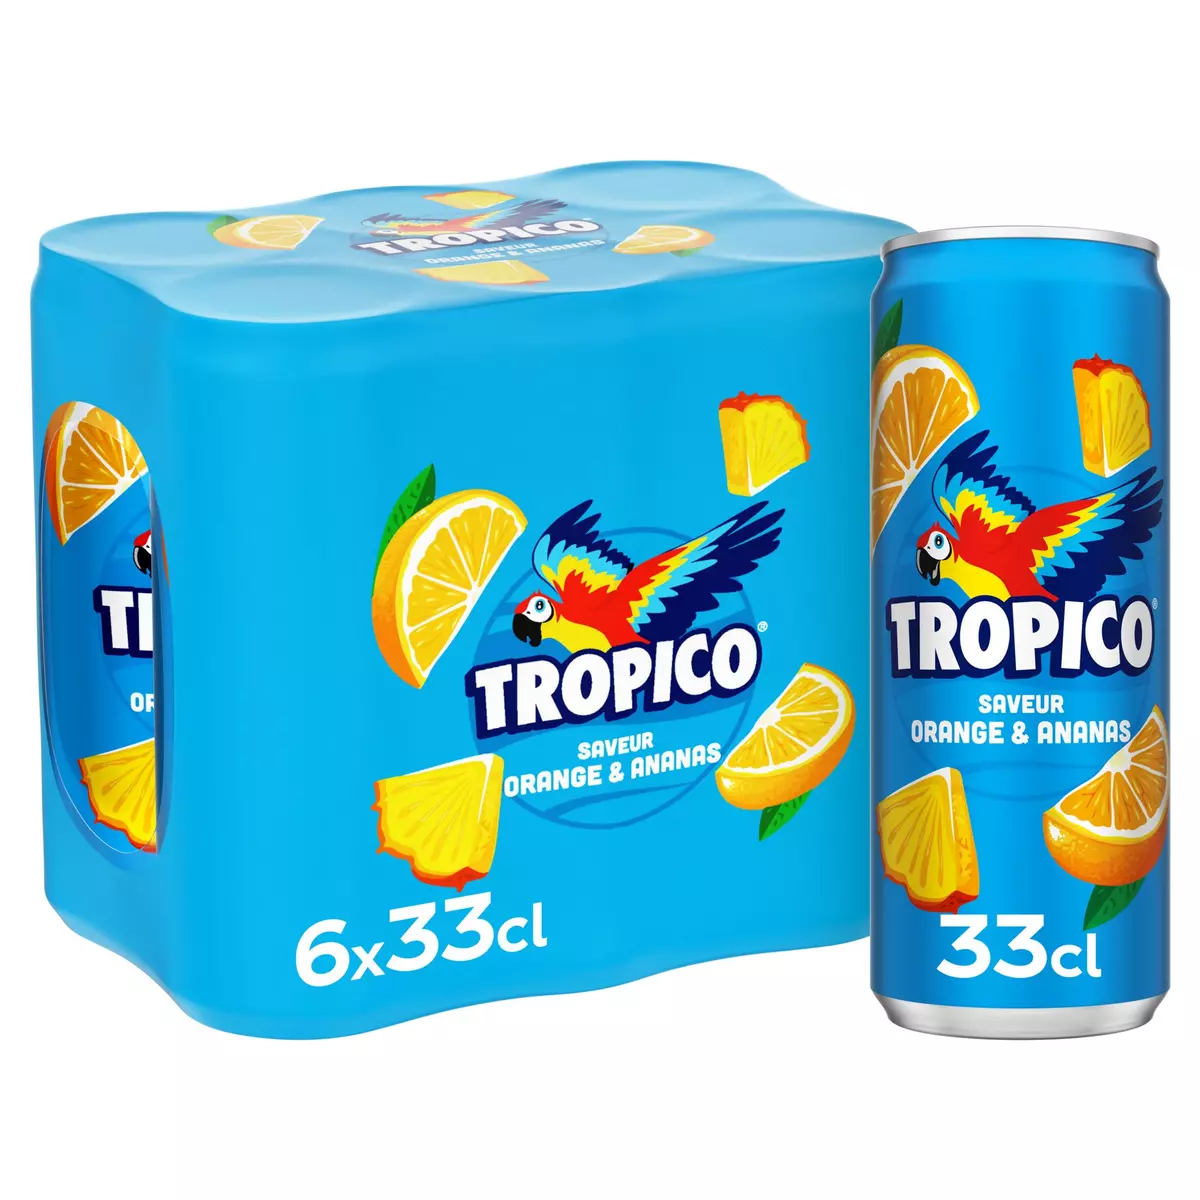 TROPICO Boisson aux fruits saveur orange ananas boîtes 6x33cl